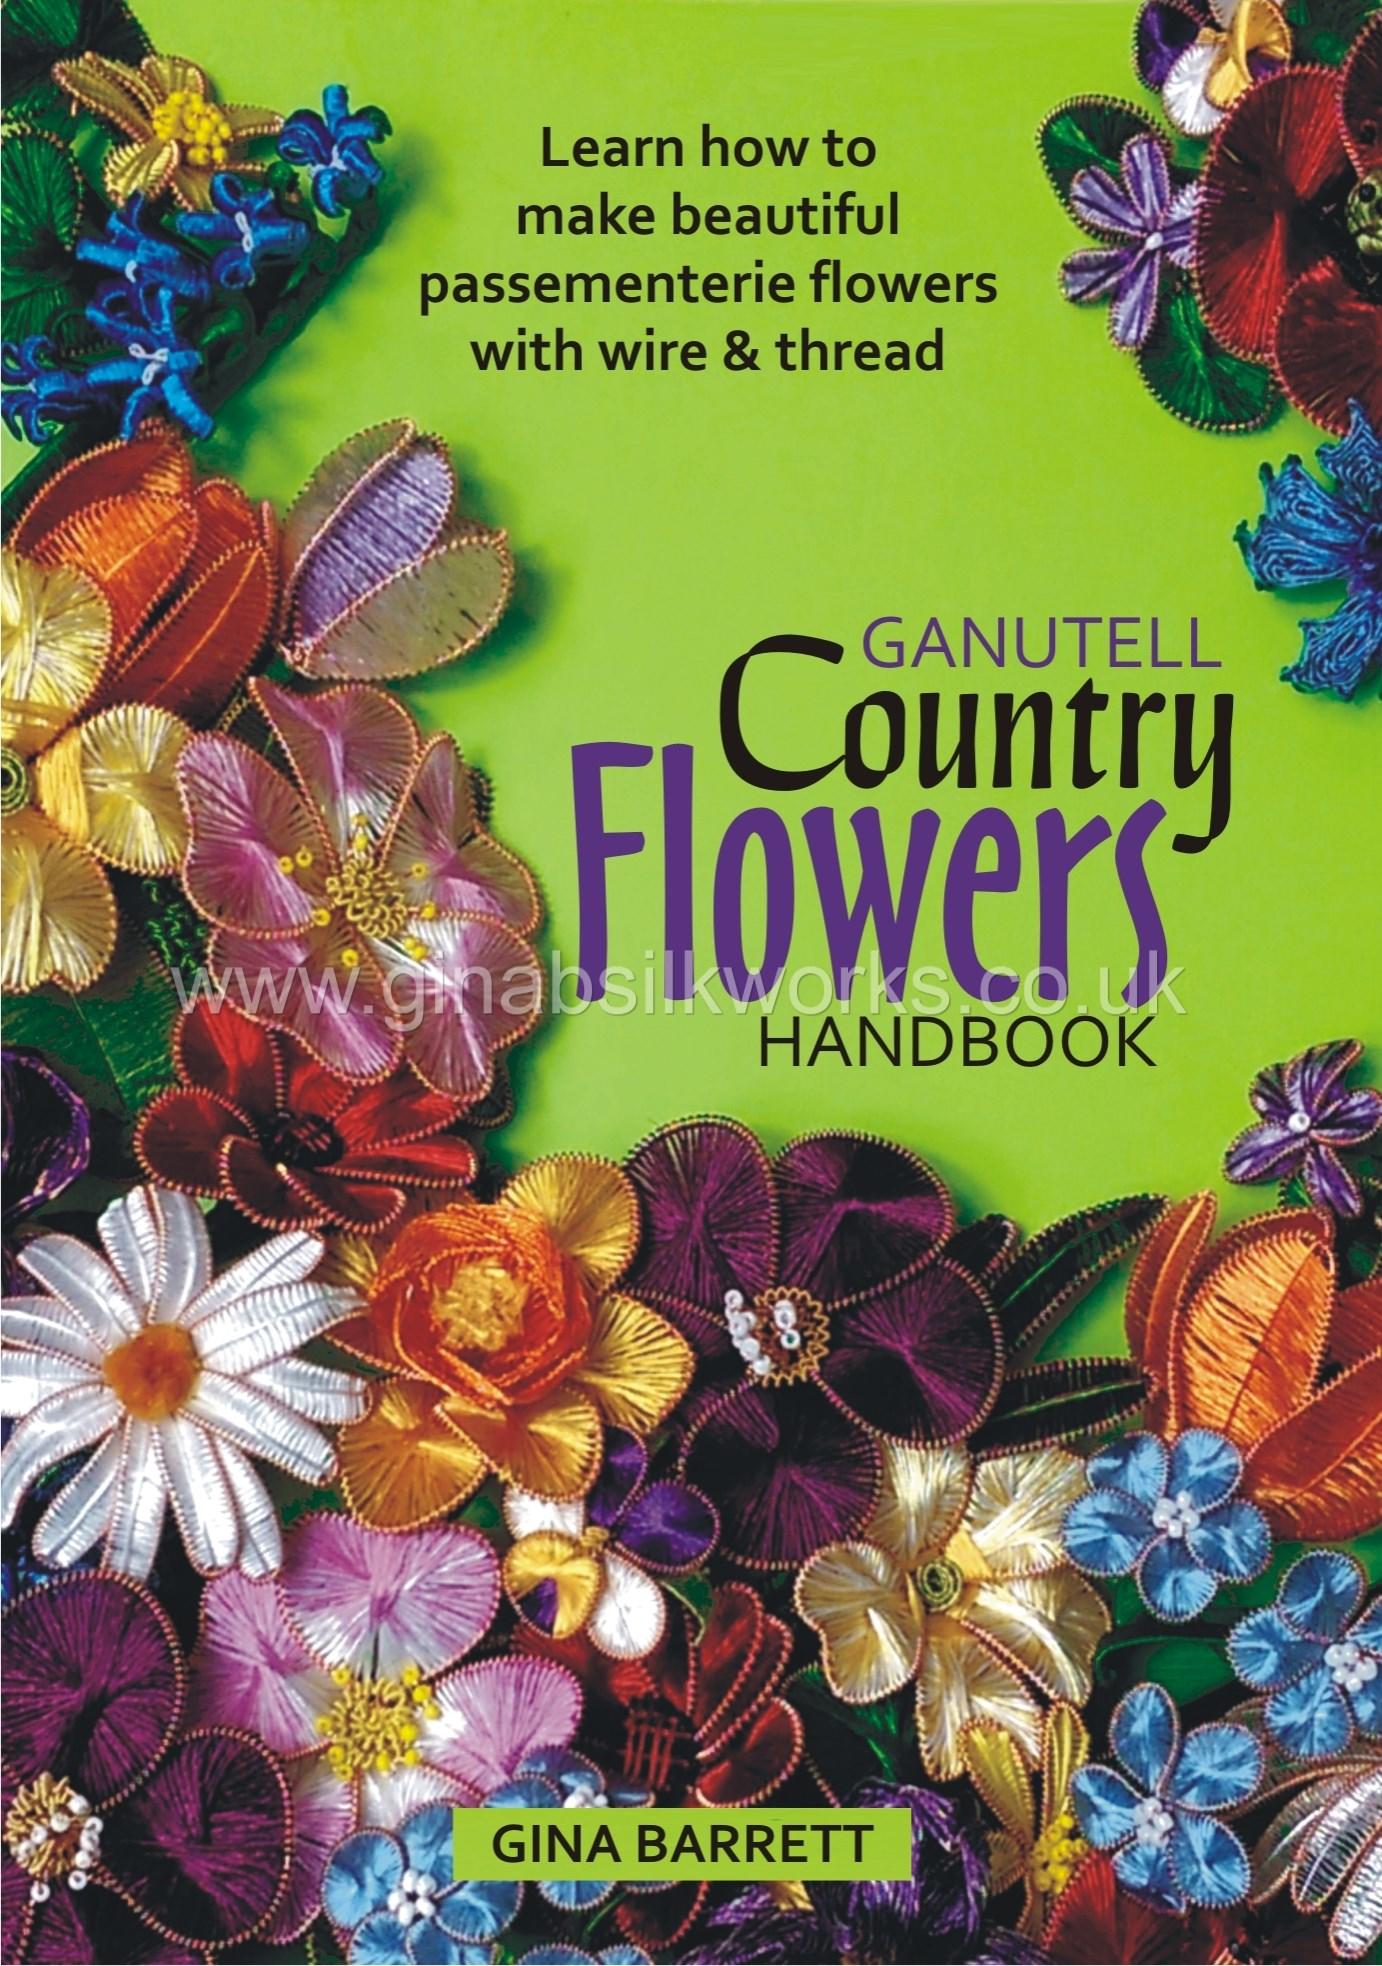 Ganutell Country Flowers Handbook - Gina Barrett